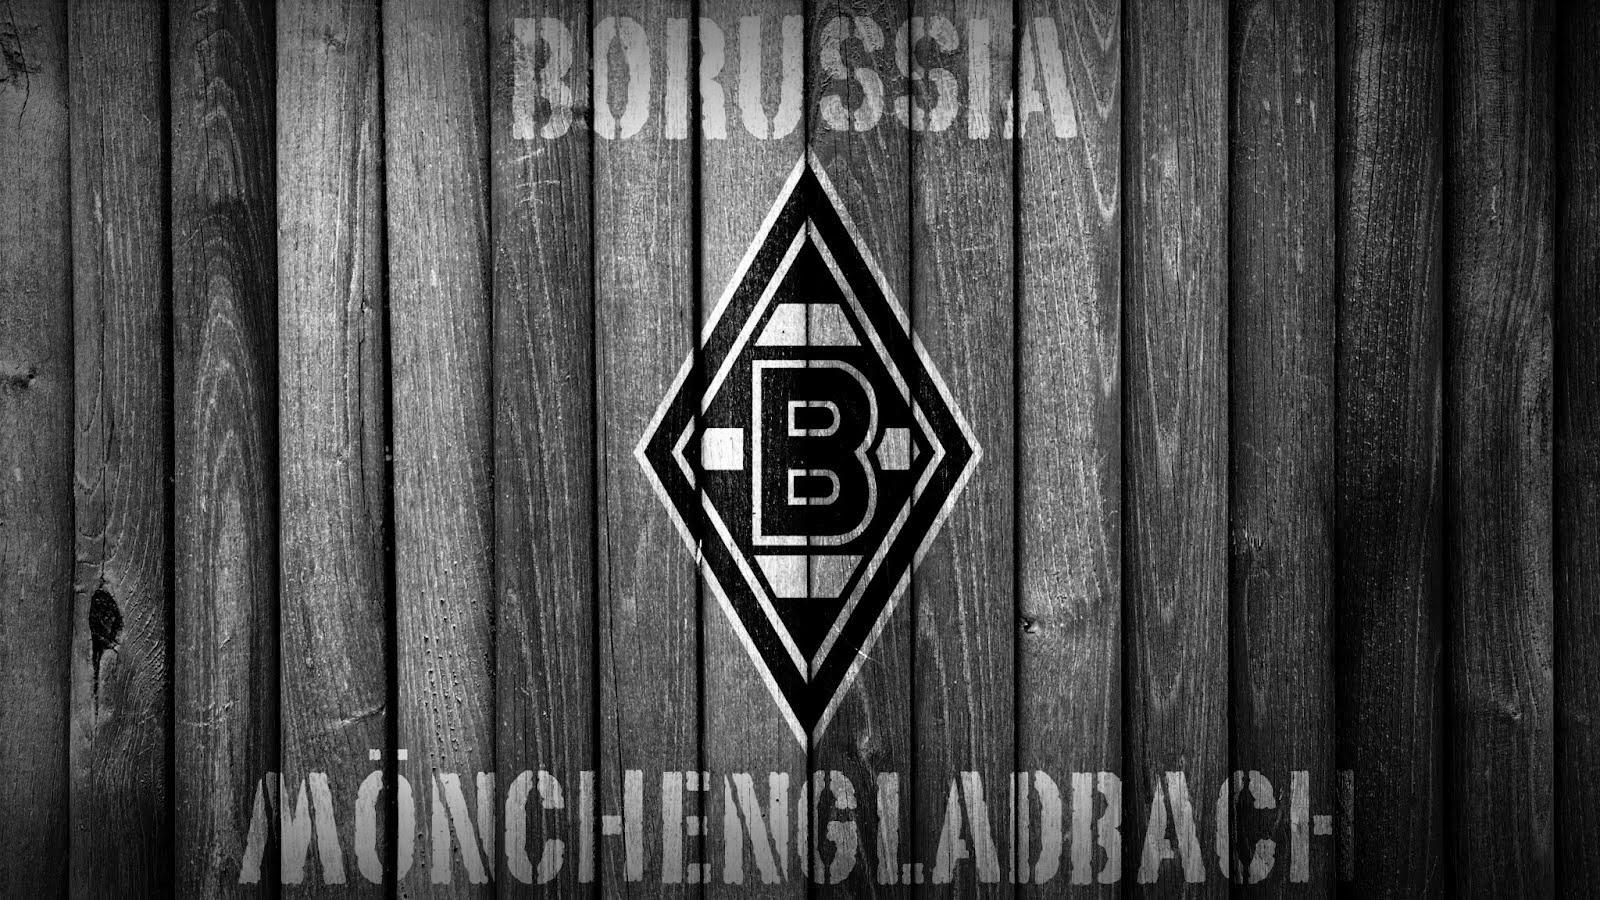 Download Borussia Monchengladbach Wallpaper in HD For Desktop or